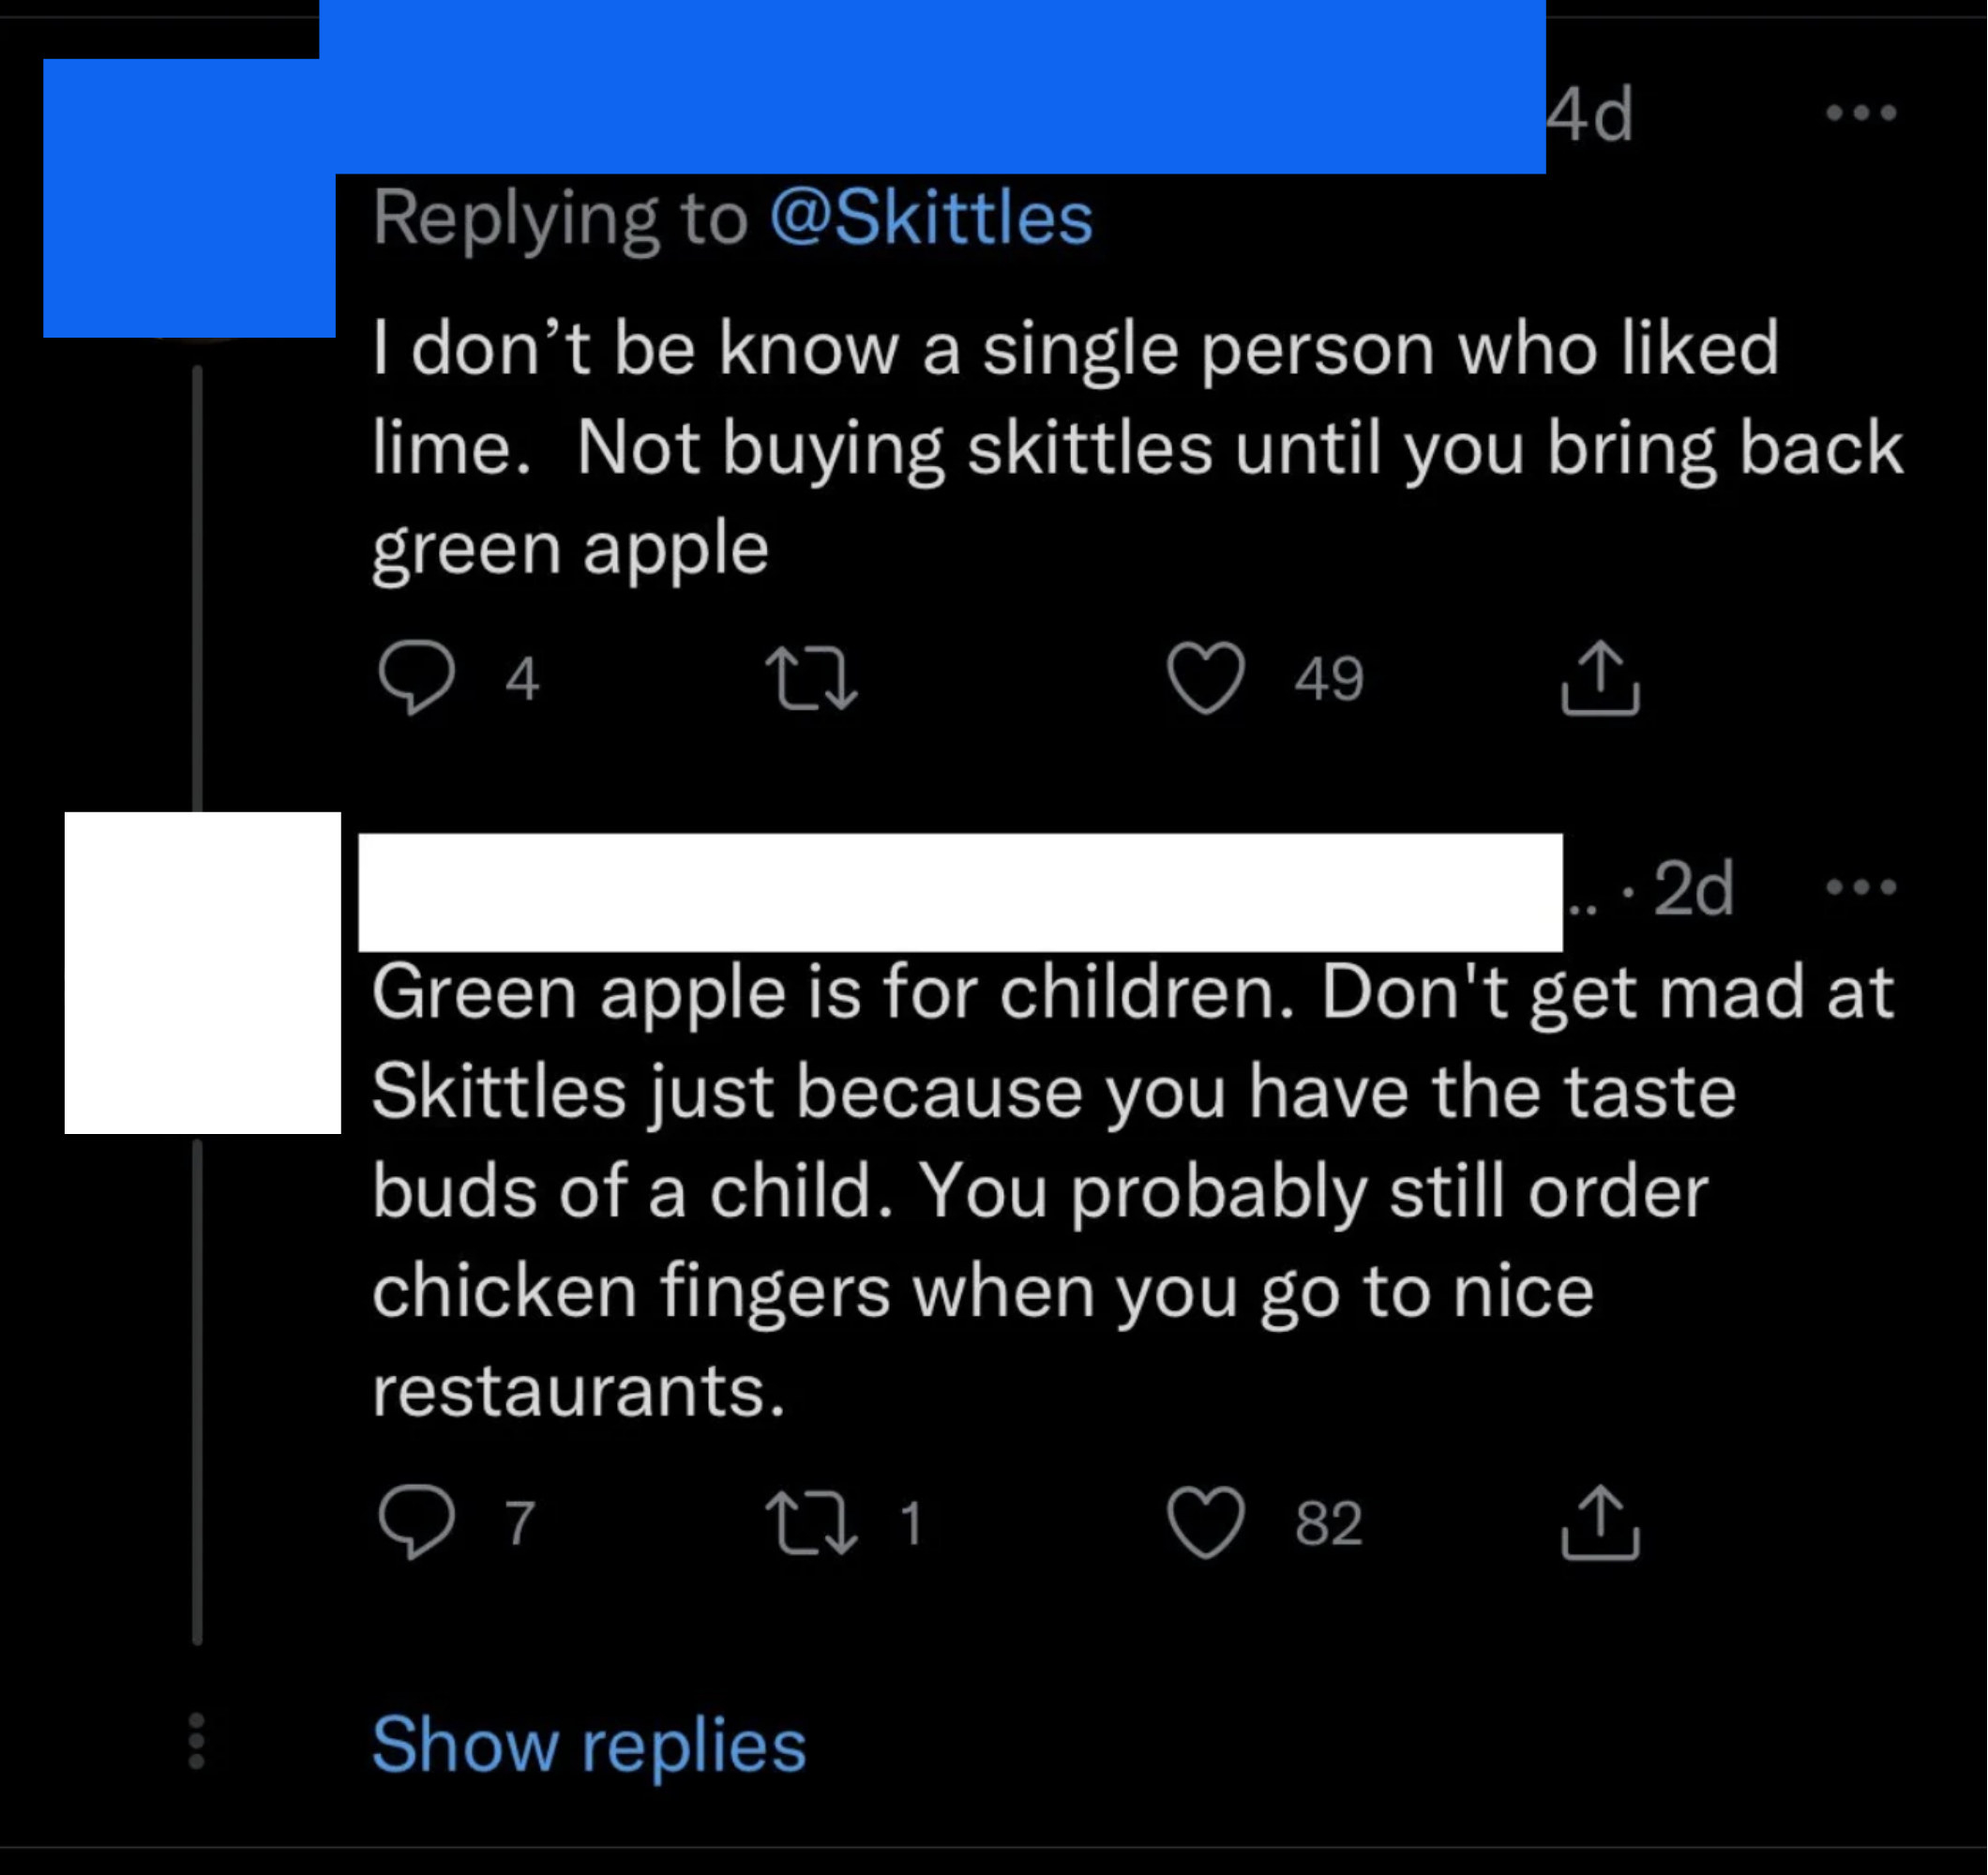 &quot;Green apple is for children.&quot;